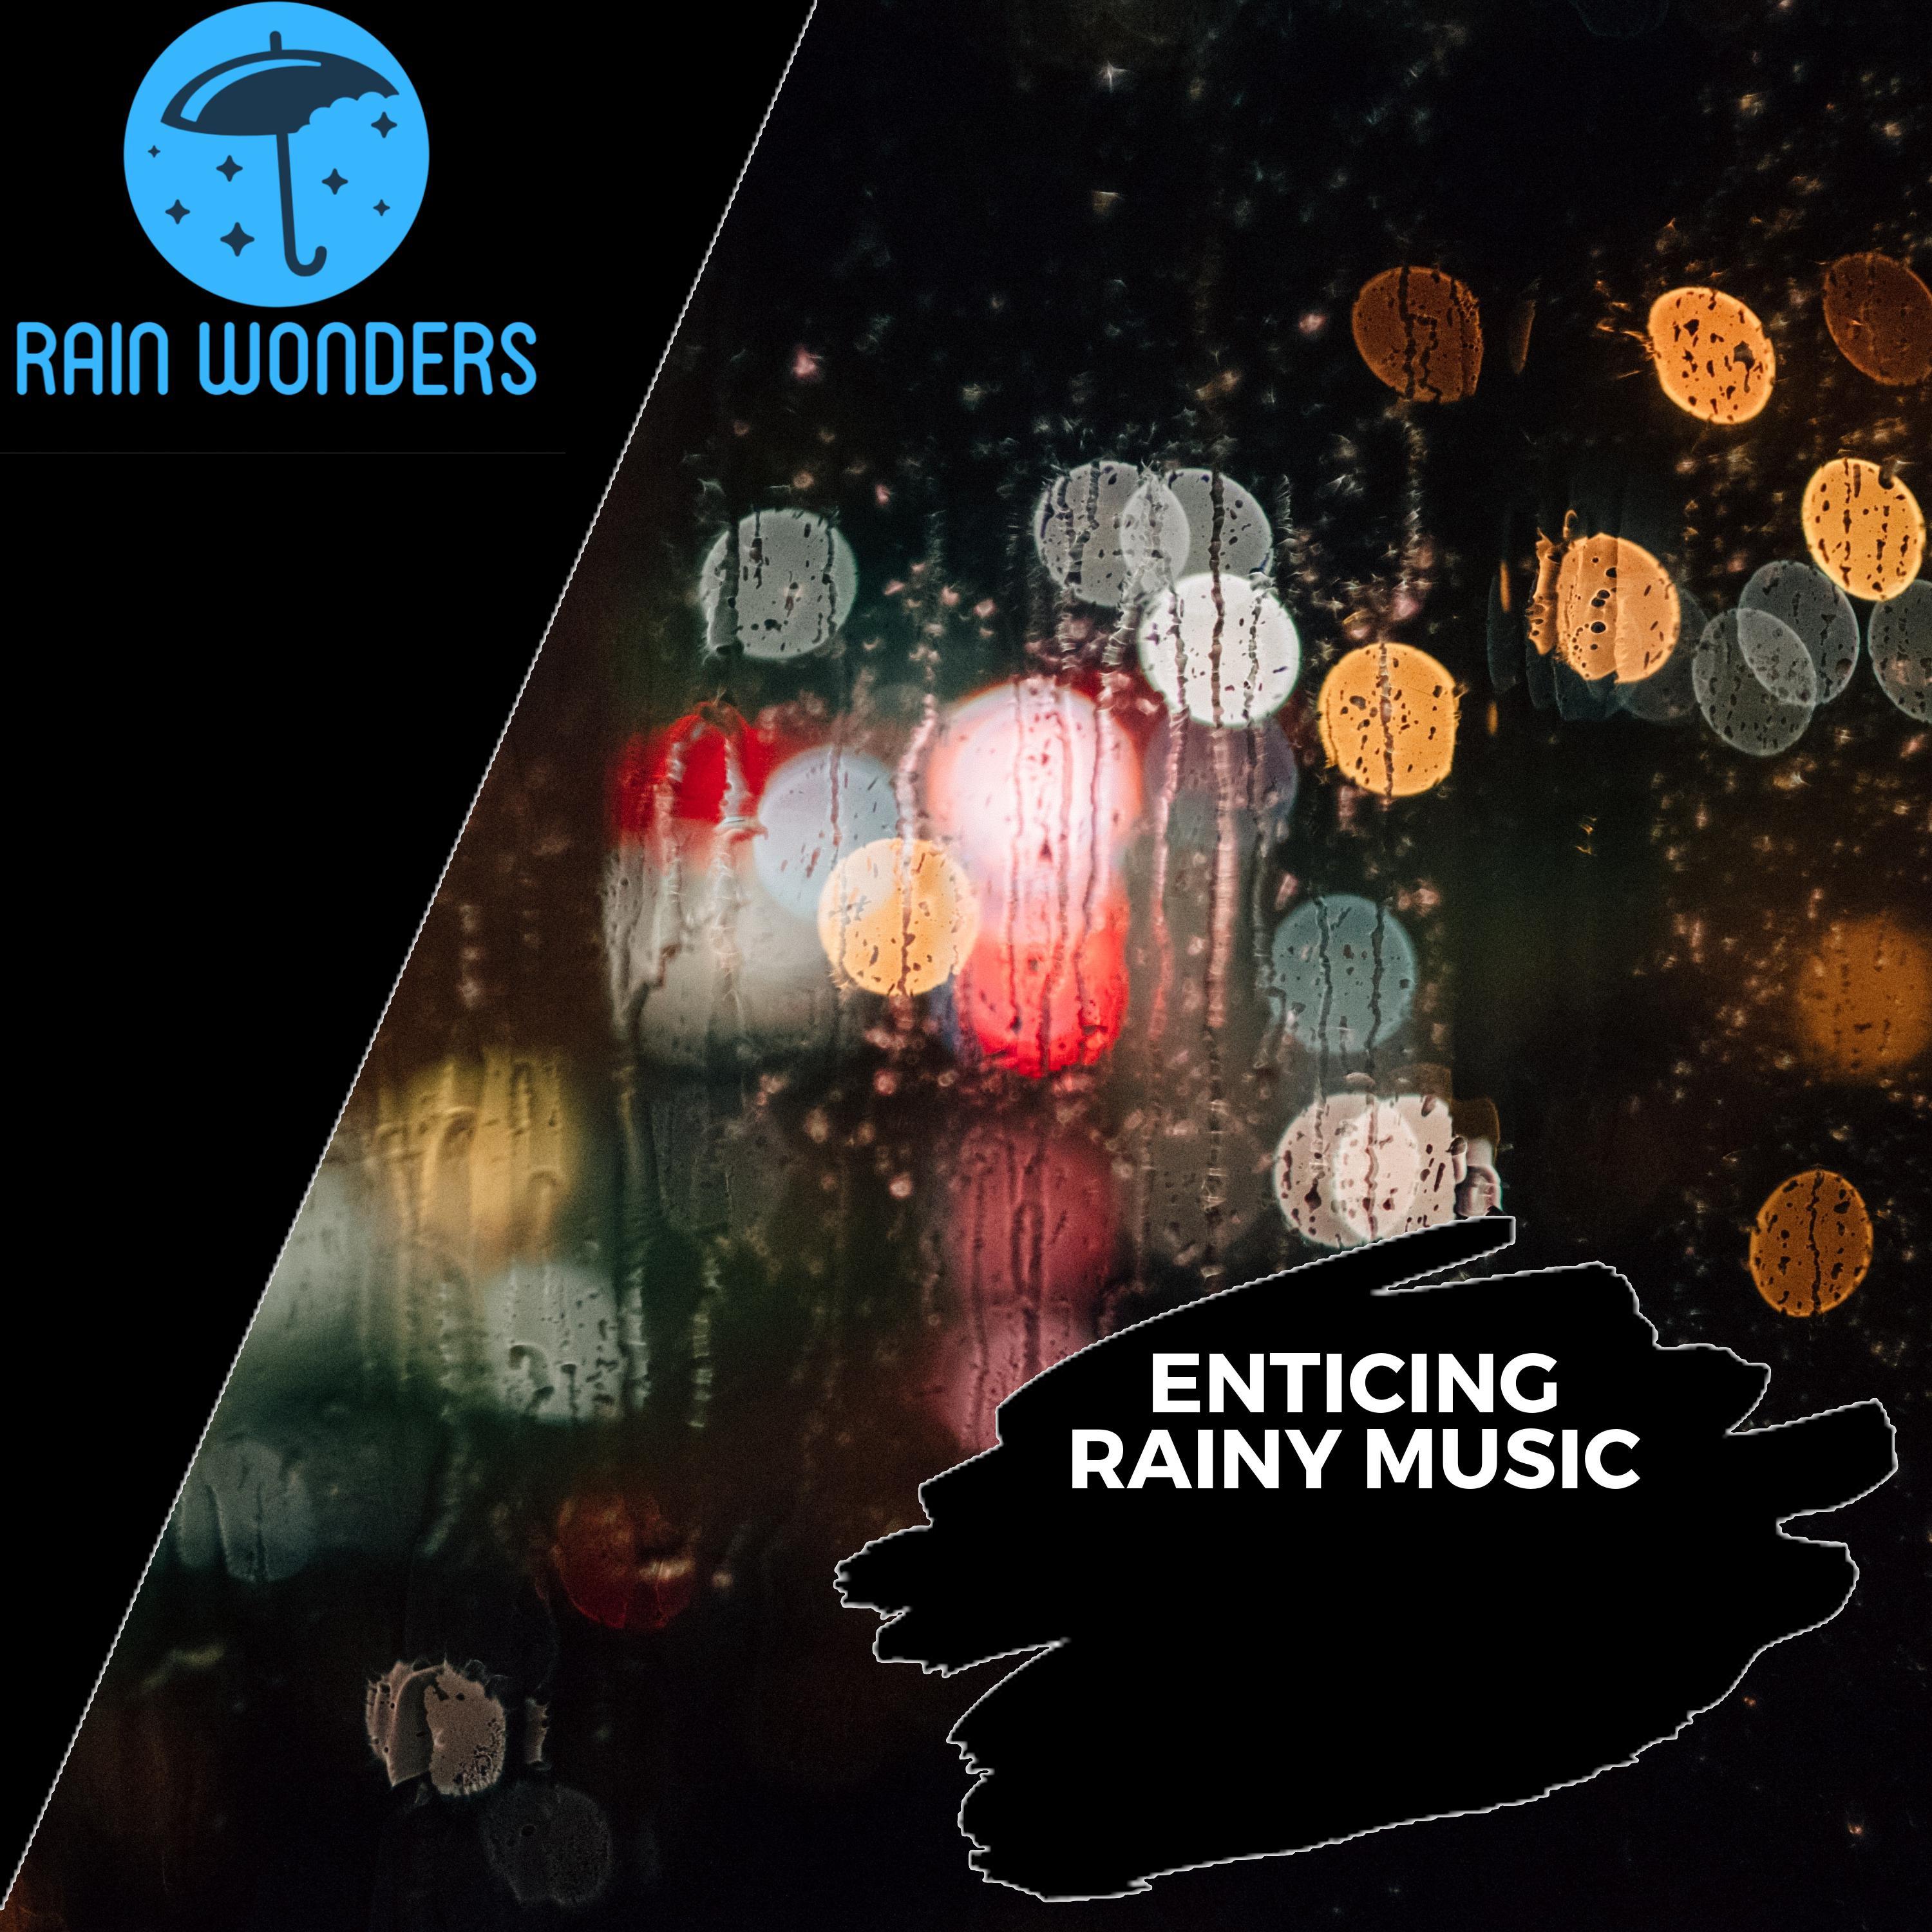 Misty Rain Sound Project - Mindfulness and Rain and Jungle Melody